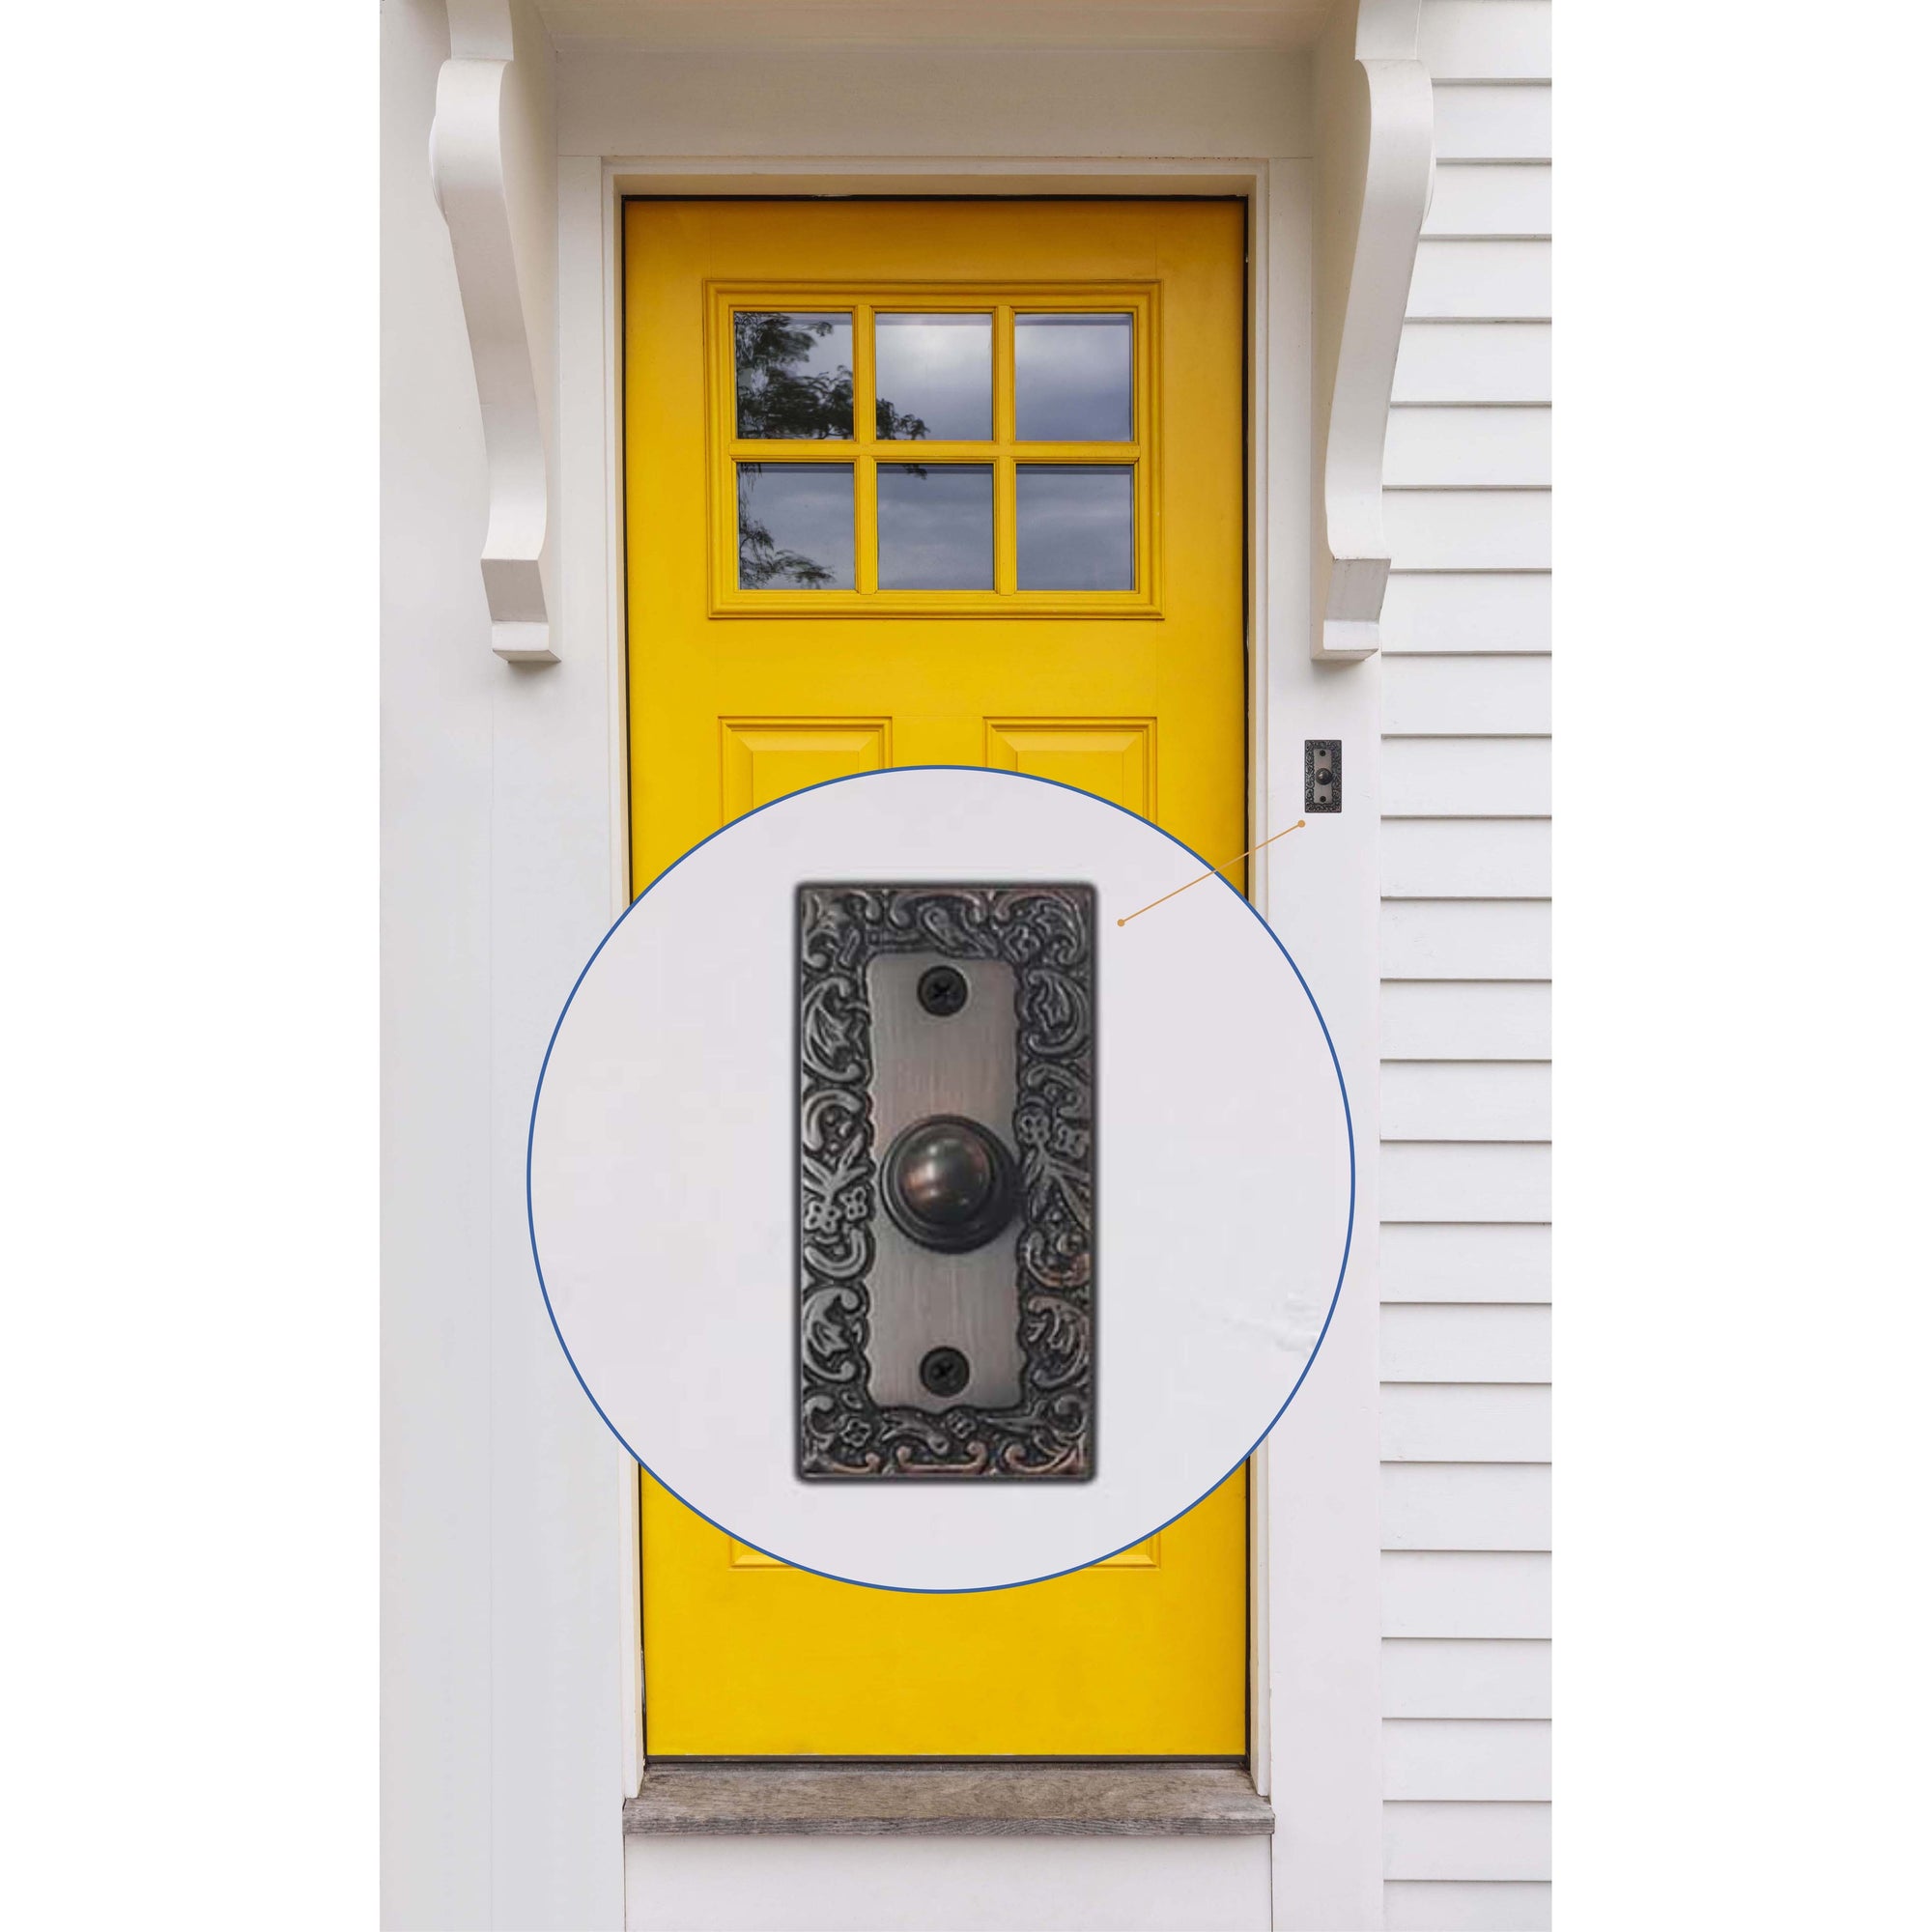 Decorative Doorbell Button – Finest Quality Bell Push Button